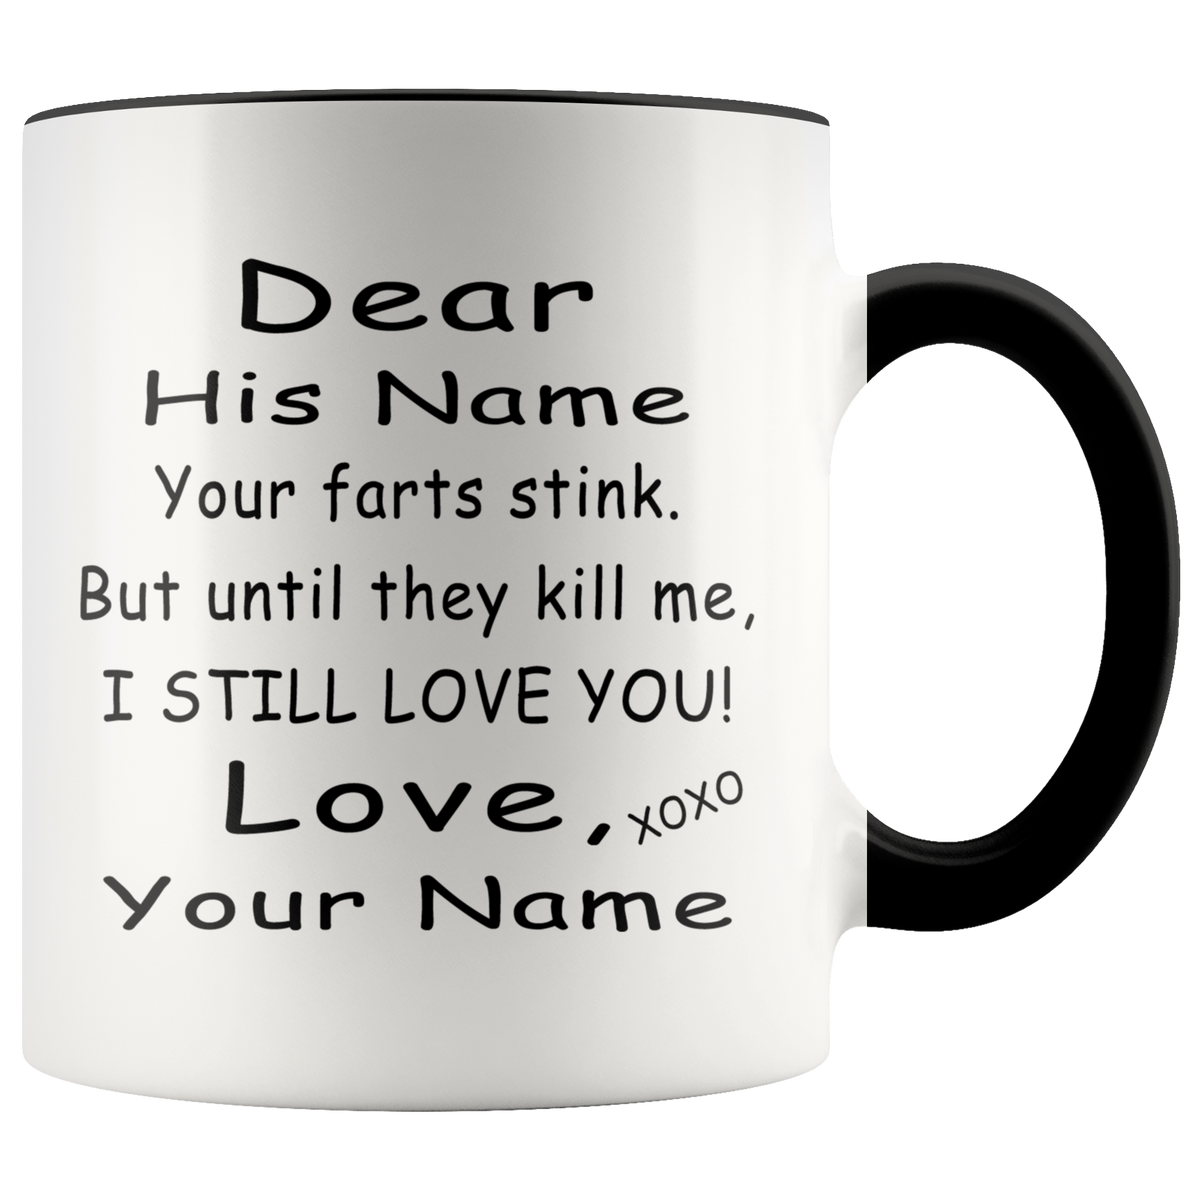 Funny Mug Gift For Him Men - Your Farts Stink But I Still Love You Accent Coffee Mug 11oz